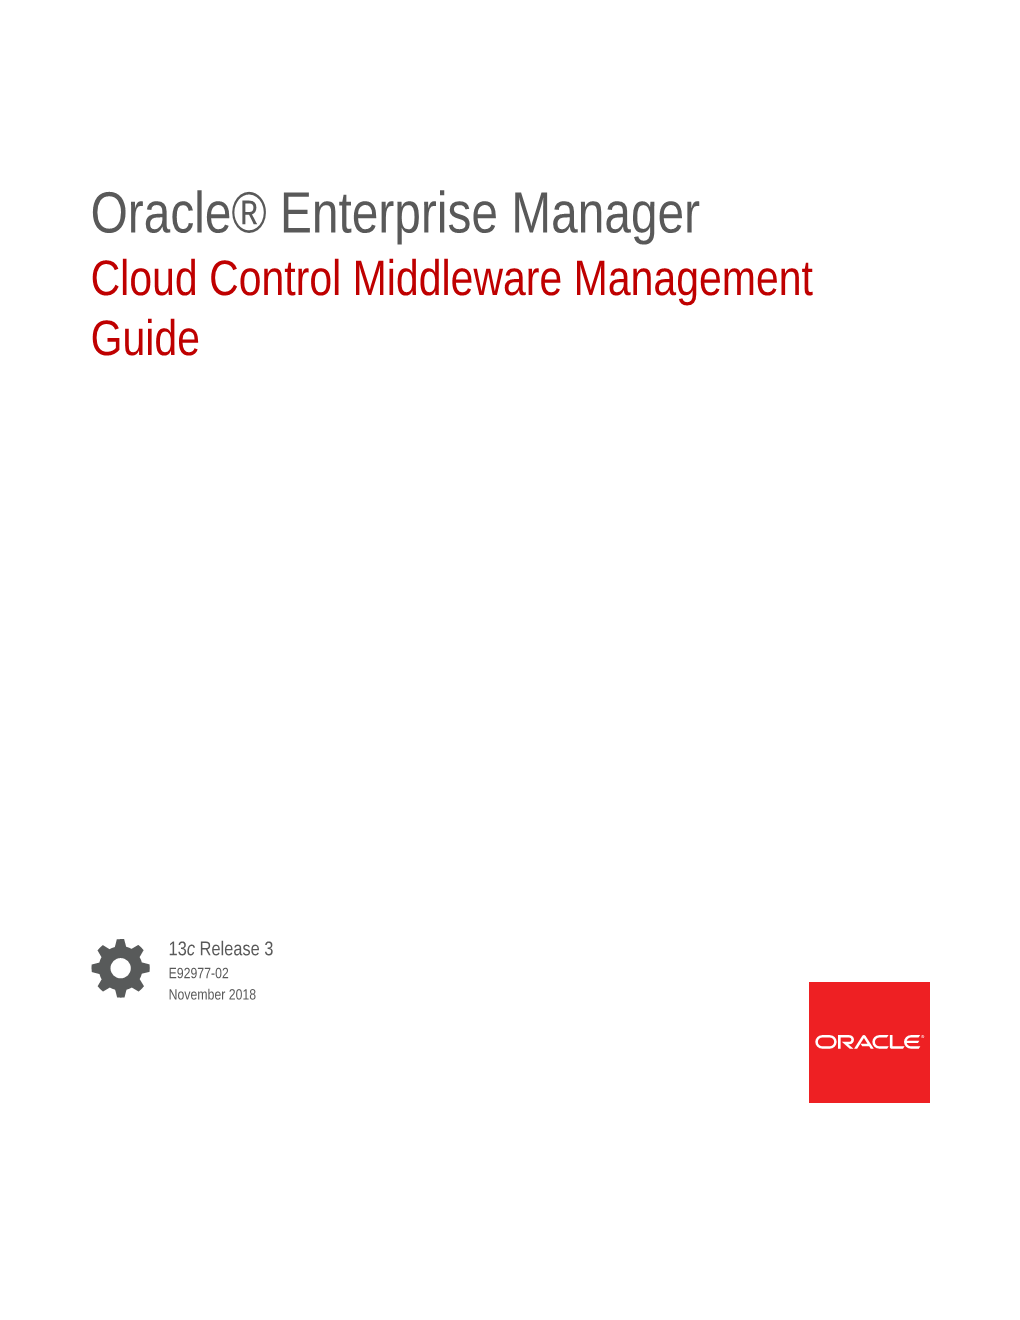 Cloud Control Middleware Management Guide